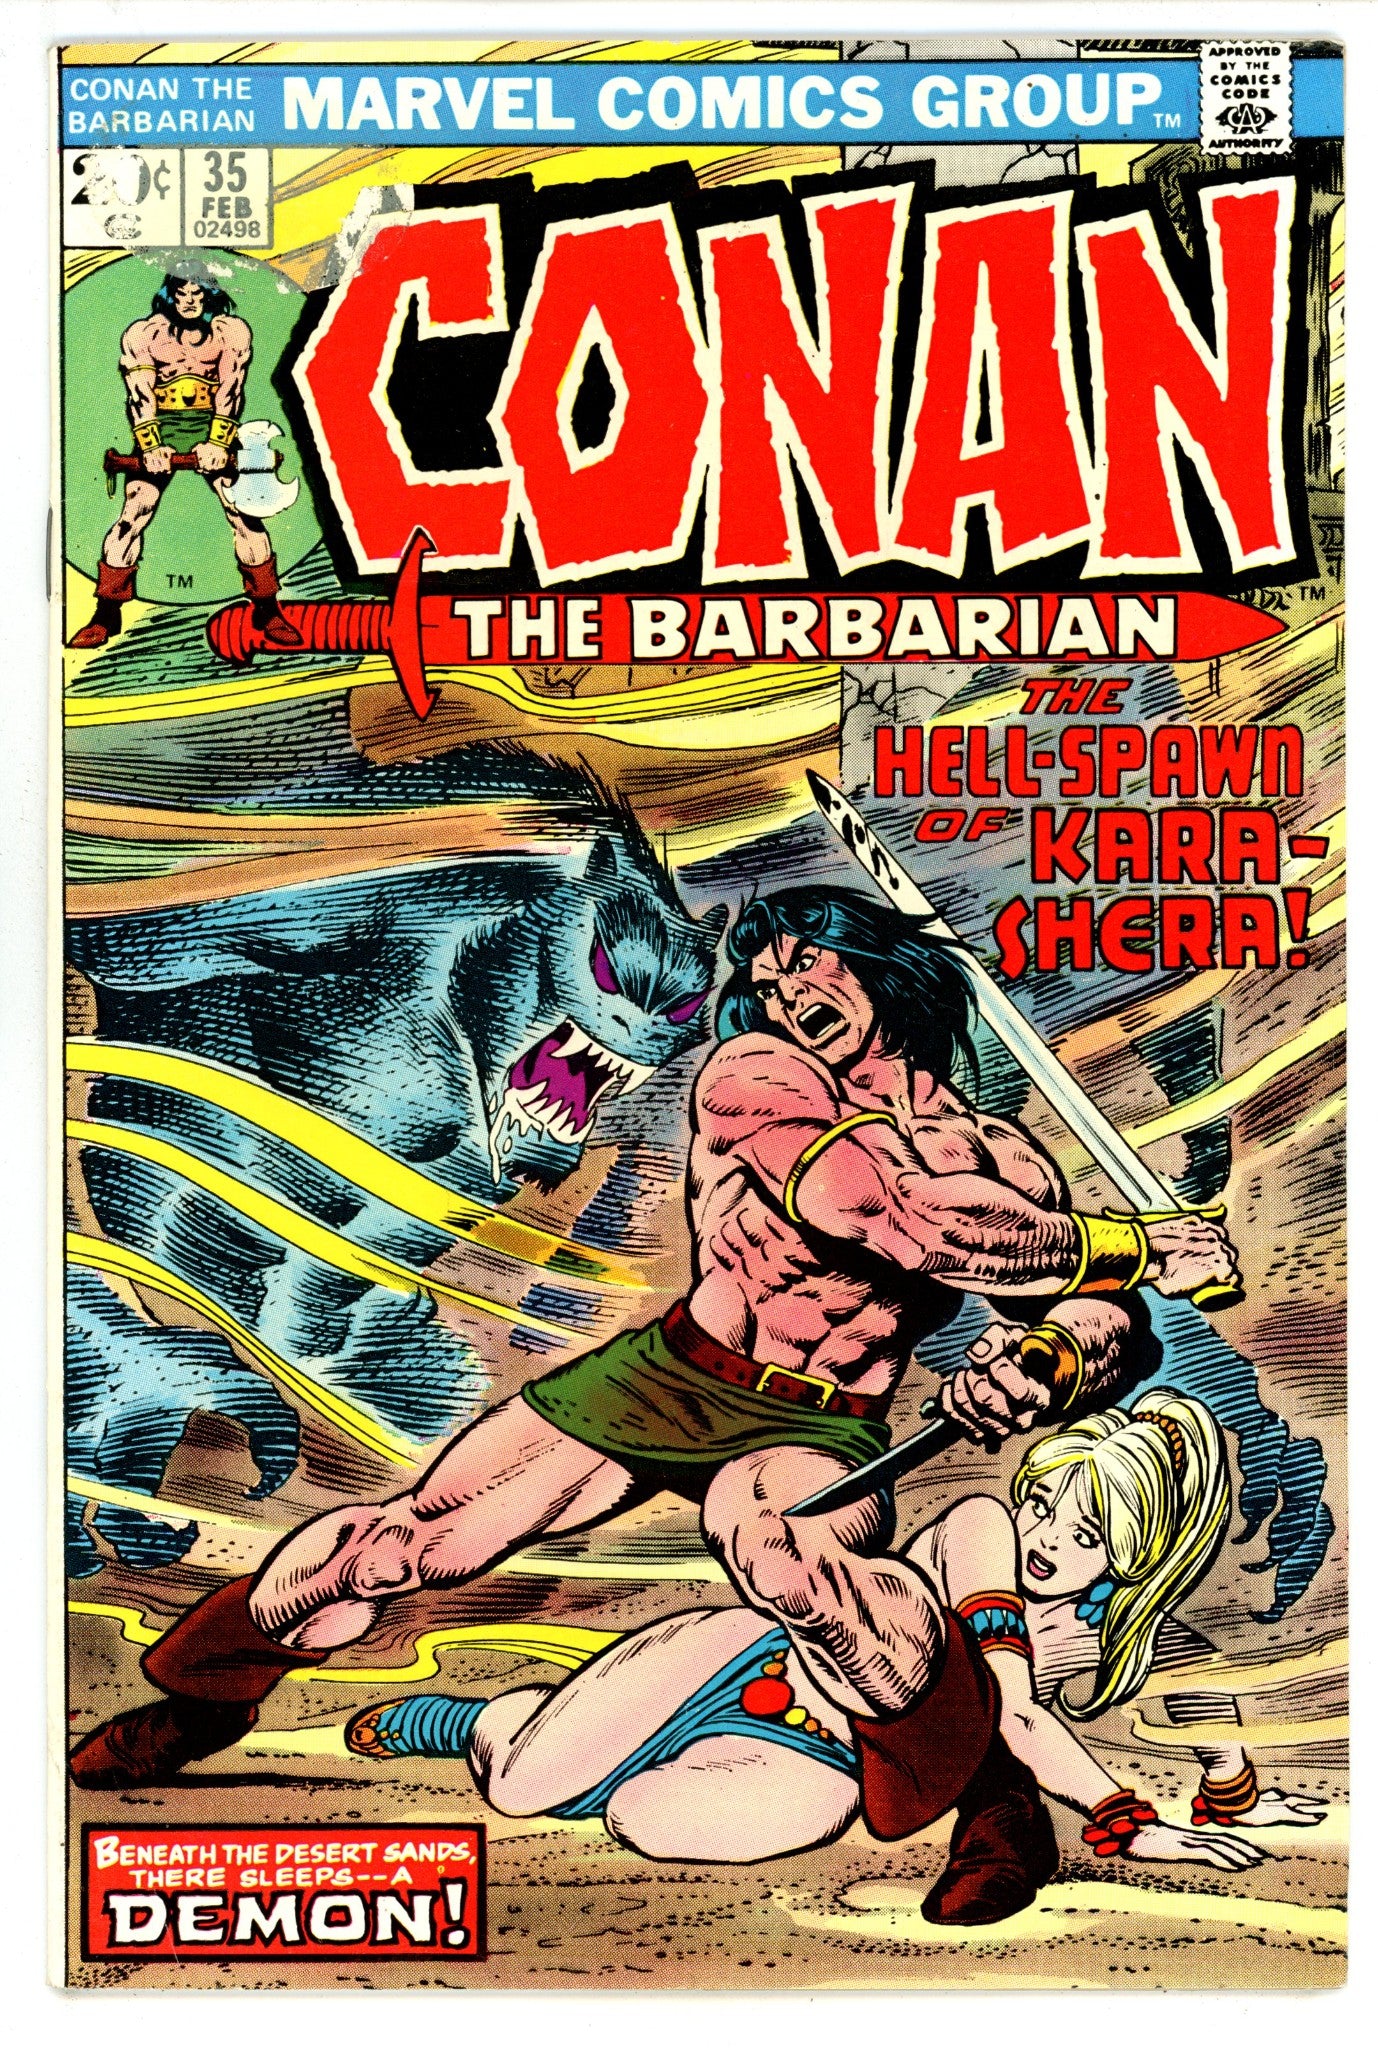 Conan the Barbarian Vol 1 35 VG (4.0) (1974) 